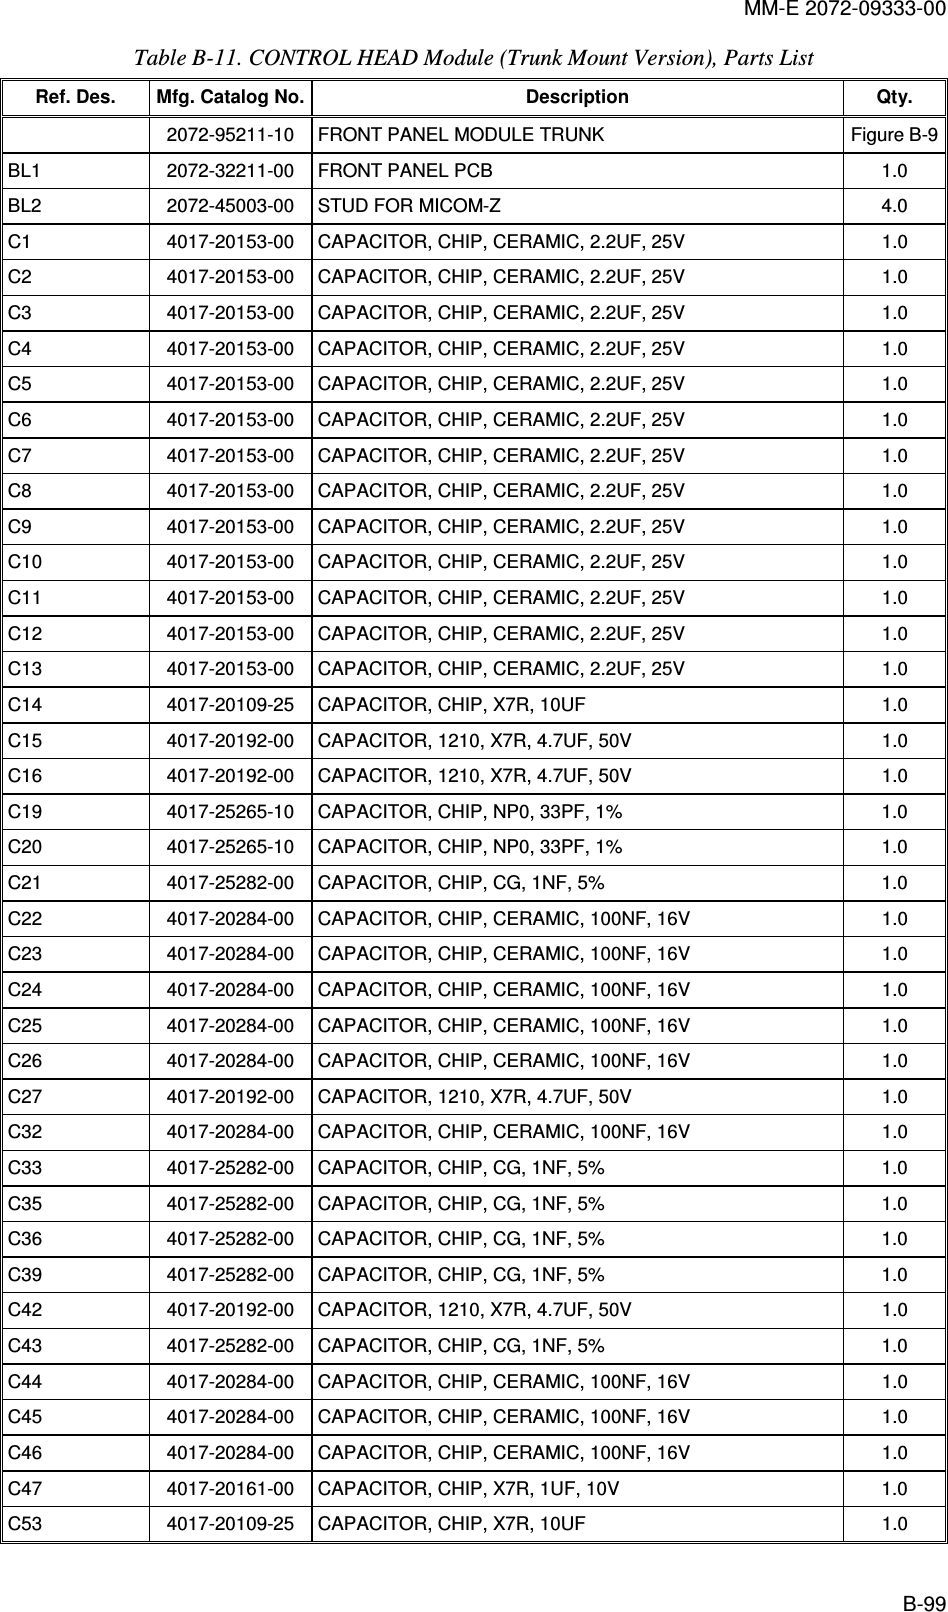 MM-E 2072-09333-00 B-99 Table  B-11. CONTROL HEAD Module (Trunk Mount Version), Parts List Ref. Des.  Mfg. Catalog No. Description  Qty.   2072-95211-10  FRONT PANEL MODULE TRUNK  Figure  B-9 BL1   2072-32211-00   FRONT PANEL PCB   1.0  BL2   2072-45003-00   STUD FOR MICOM-Z  4.0  C1   4017-20153-00   CAPACITOR, CHIP, CERAMIC, 2.2UF, 25V  1.0  C2   4017-20153-00   CAPACITOR, CHIP, CERAMIC, 2.2UF, 25V  1.0  C3   4017-20153-00   CAPACITOR, CHIP, CERAMIC, 2.2UF, 25V  1.0  C4   4017-20153-00   CAPACITOR, CHIP, CERAMIC, 2.2UF, 25V  1.0  C5   4017-20153-00   CAPACITOR, CHIP, CERAMIC, 2.2UF, 25V  1.0  C6   4017-20153-00   CAPACITOR, CHIP, CERAMIC, 2.2UF, 25V  1.0  C7   4017-20153-00   CAPACITOR, CHIP, CERAMIC, 2.2UF, 25V  1.0  C8   4017-20153-00   CAPACITOR, CHIP, CERAMIC, 2.2UF, 25V  1.0  C9   4017-20153-00   CAPACITOR, CHIP, CERAMIC, 2.2UF, 25V  1.0  C10   4017-20153-00   CAPACITOR, CHIP, CERAMIC, 2.2UF, 25V  1.0  C11   4017-20153-00   CAPACITOR, CHIP, CERAMIC, 2.2UF, 25V  1.0  C12   4017-20153-00   CAPACITOR, CHIP, CERAMIC, 2.2UF, 25V  1.0  C13   4017-20153-00   CAPACITOR, CHIP, CERAMIC, 2.2UF, 25V  1.0  C14   4017-20109-25   CAPACITOR, CHIP, X7R, 10UF  1.0  C15   4017-20192-00   CAPACITOR, 1210, X7R, 4.7UF, 50V  1.0  C16   4017-20192-00   CAPACITOR, 1210, X7R, 4.7UF, 50V  1.0  C19   4017-25265-10   CAPACITOR, CHIP, NP0, 33PF, 1%  1.0  C20   4017-25265-10   CAPACITOR, CHIP, NP0, 33PF, 1%  1.0  C21   4017-25282-00   CAPACITOR, CHIP, CG, 1NF, 5%  1.0  C22   4017-20284-00   CAPACITOR, CHIP, CERAMIC, 100NF, 16V  1.0  C23   4017-20284-00   CAPACITOR, CHIP, CERAMIC, 100NF, 16V  1.0  C24   4017-20284-00   CAPACITOR, CHIP, CERAMIC, 100NF, 16V  1.0  C25   4017-20284-00   CAPACITOR, CHIP, CERAMIC, 100NF, 16V  1.0  C26   4017-20284-00   CAPACITOR, CHIP, CERAMIC, 100NF, 16V  1.0  C27   4017-20192-00   CAPACITOR, 1210, X7R, 4.7UF, 50V  1.0  C32   4017-20284-00   CAPACITOR, CHIP, CERAMIC, 100NF, 16V  1.0  C33   4017-25282-00   CAPACITOR, CHIP, CG, 1NF, 5%  1.0  C35   4017-25282-00   CAPACITOR, CHIP, CG, 1NF, 5%  1.0  C36   4017-25282-00   CAPACITOR, CHIP, CG, 1NF, 5%  1.0  C39   4017-25282-00   CAPACITOR, CHIP, CG, 1NF, 5%  1.0  C42   4017-20192-00   CAPACITOR, 1210, X7R, 4.7UF, 50V  1.0  C43   4017-25282-00   CAPACITOR, CHIP, CG, 1NF, 5%  1.0  C44   4017-20284-00   CAPACITOR, CHIP, CERAMIC, 100NF, 16V  1.0  C45   4017-20284-00   CAPACITOR, CHIP, CERAMIC, 100NF, 16V  1.0  C46   4017-20284-00   CAPACITOR, CHIP, CERAMIC, 100NF, 16V  1.0  C47   4017-20161-00   CAPACITOR, CHIP, X7R, 1UF, 10V  1.0  C53   4017-20109-25   CAPACITOR, CHIP, X7R, 10UF  1.0  